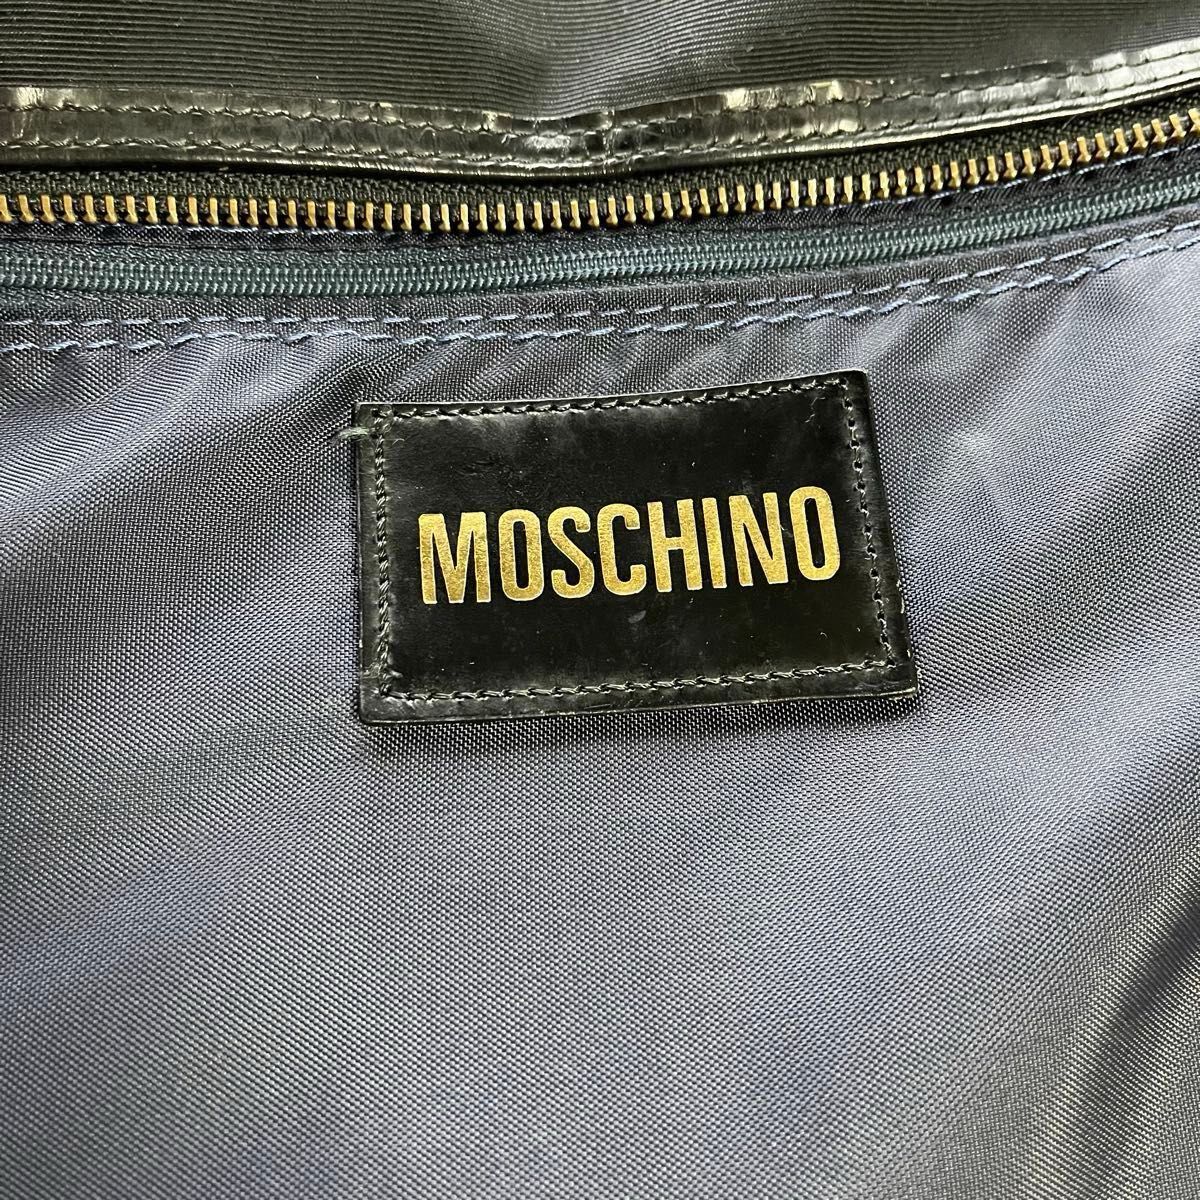 MOSCHINO ボストンバッグ 2way 旅行用 大きめ ブラック ショルダー ブランド 高級 オシャレ 金ロゴ モスキーノ